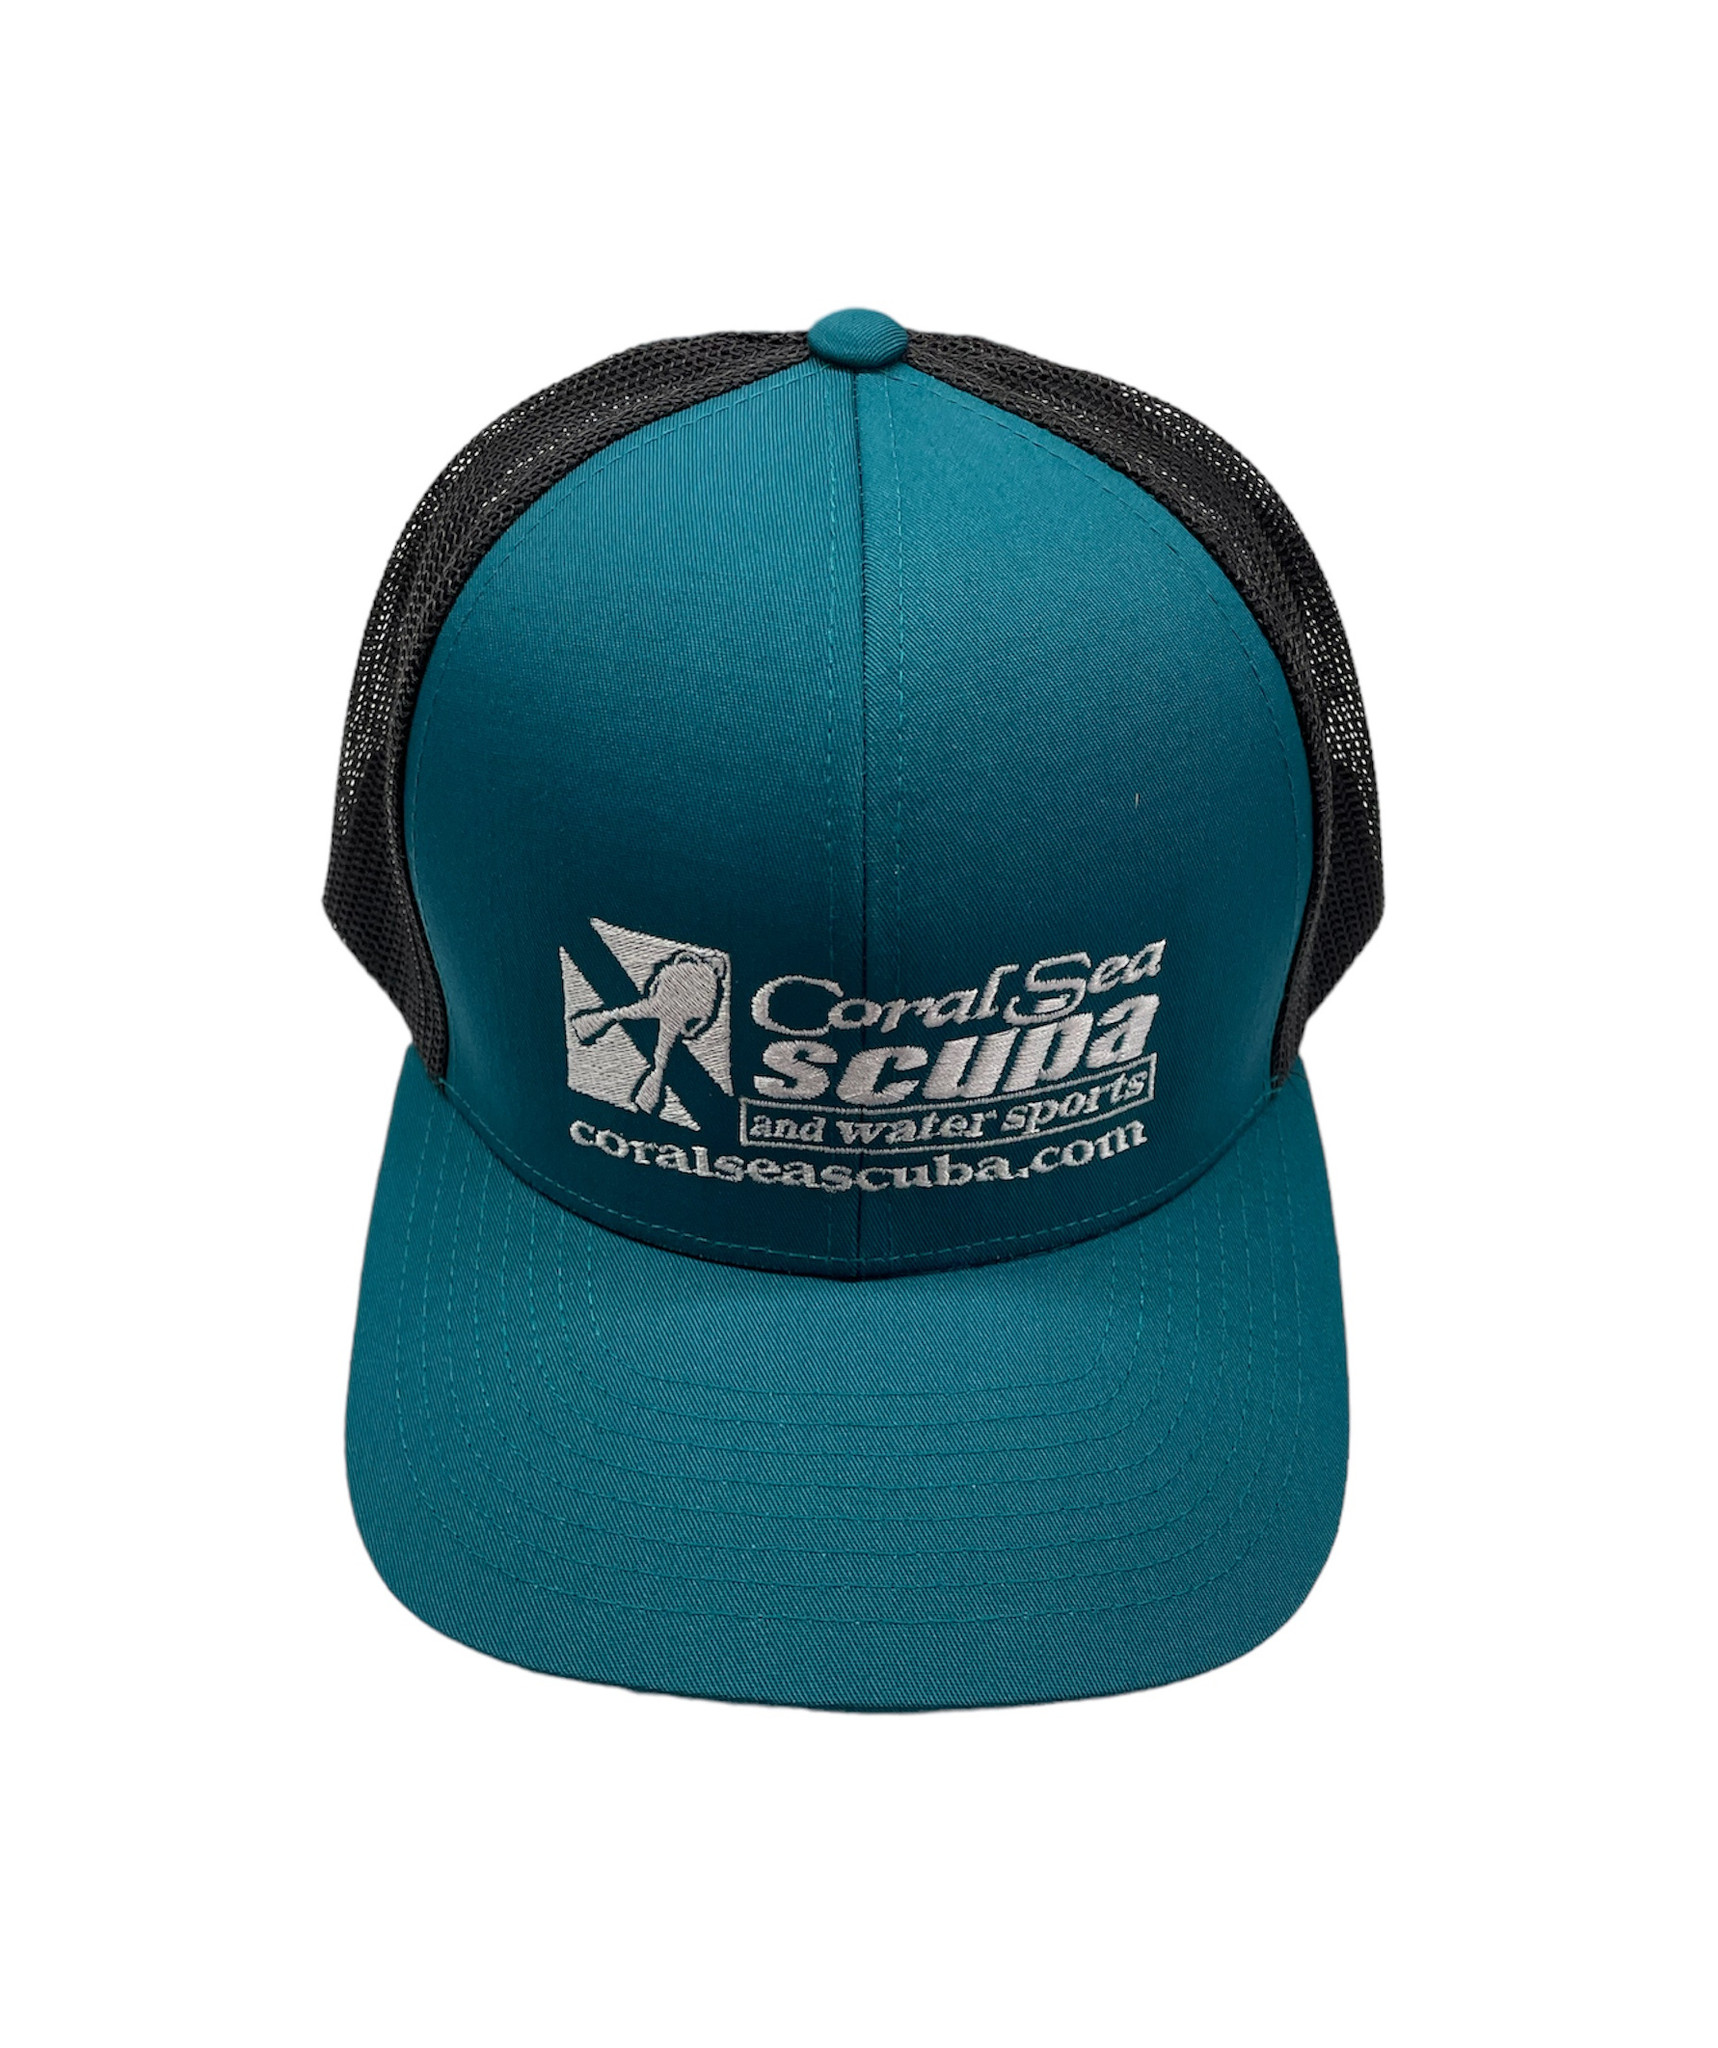  Hogfish Trucker Hat: Adjustable Snapback, Spearfishing